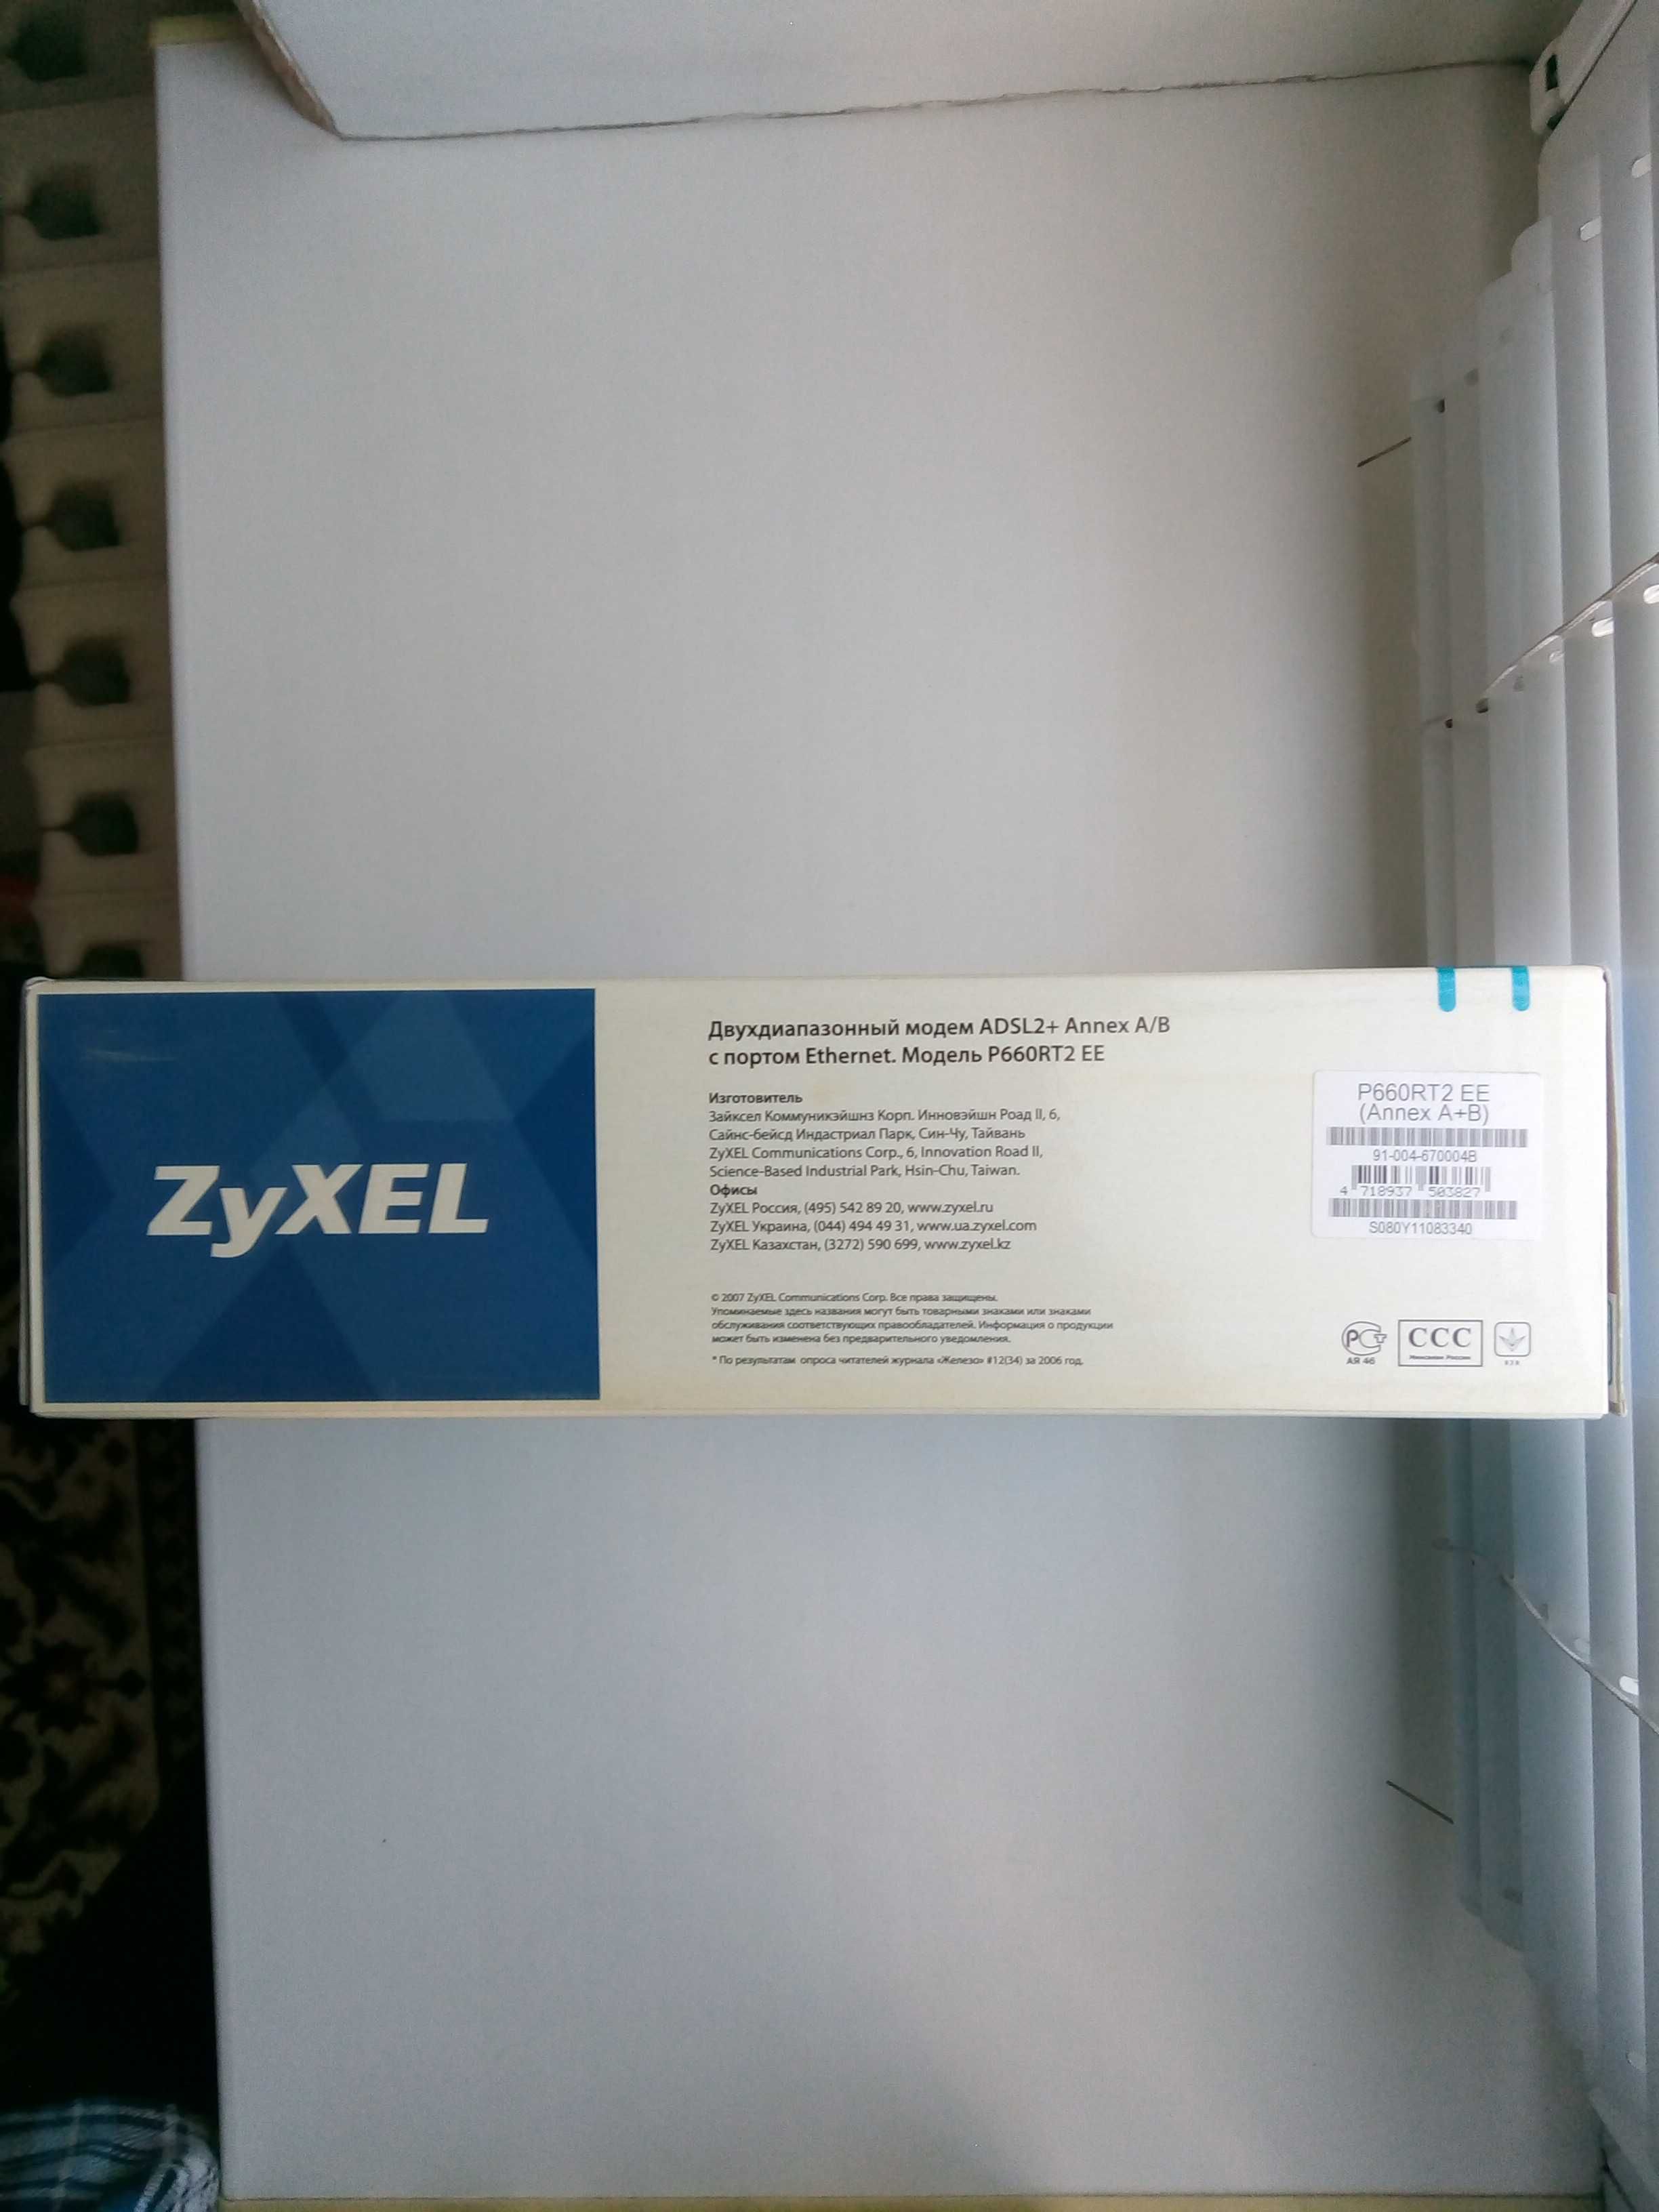 Zyzel Prestige/Relail 660 RT2 ADSL2 Modem Black + Splitter